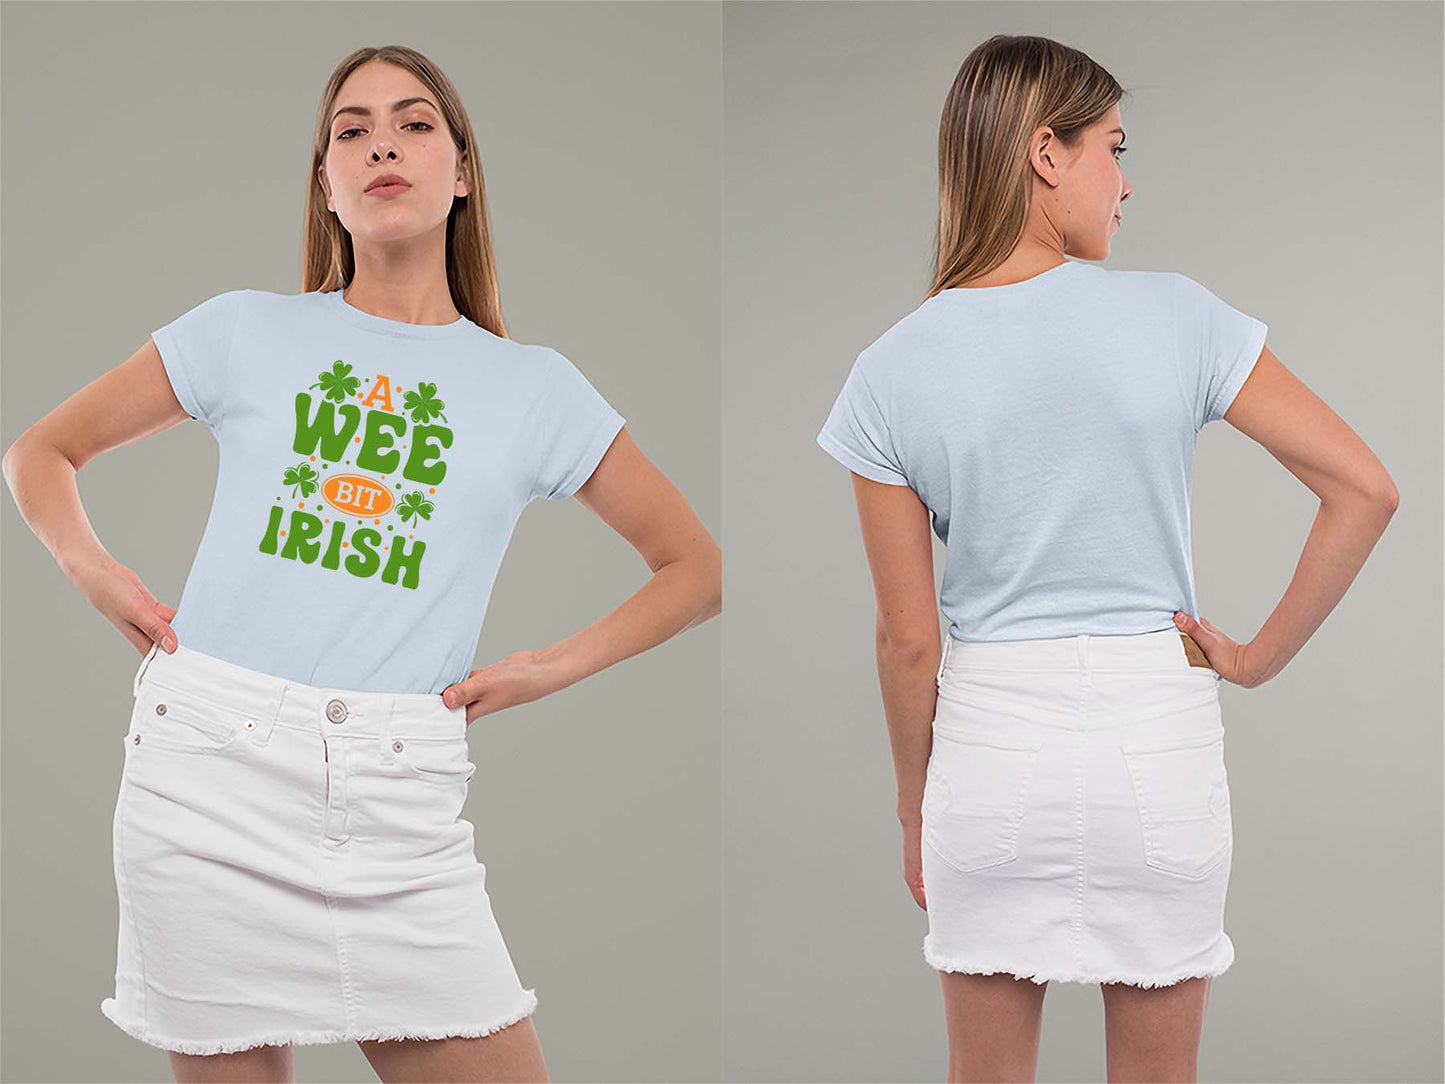 A Wee Bit Irish Ladies Crew (Round) Neck Shirt Small Light Blue